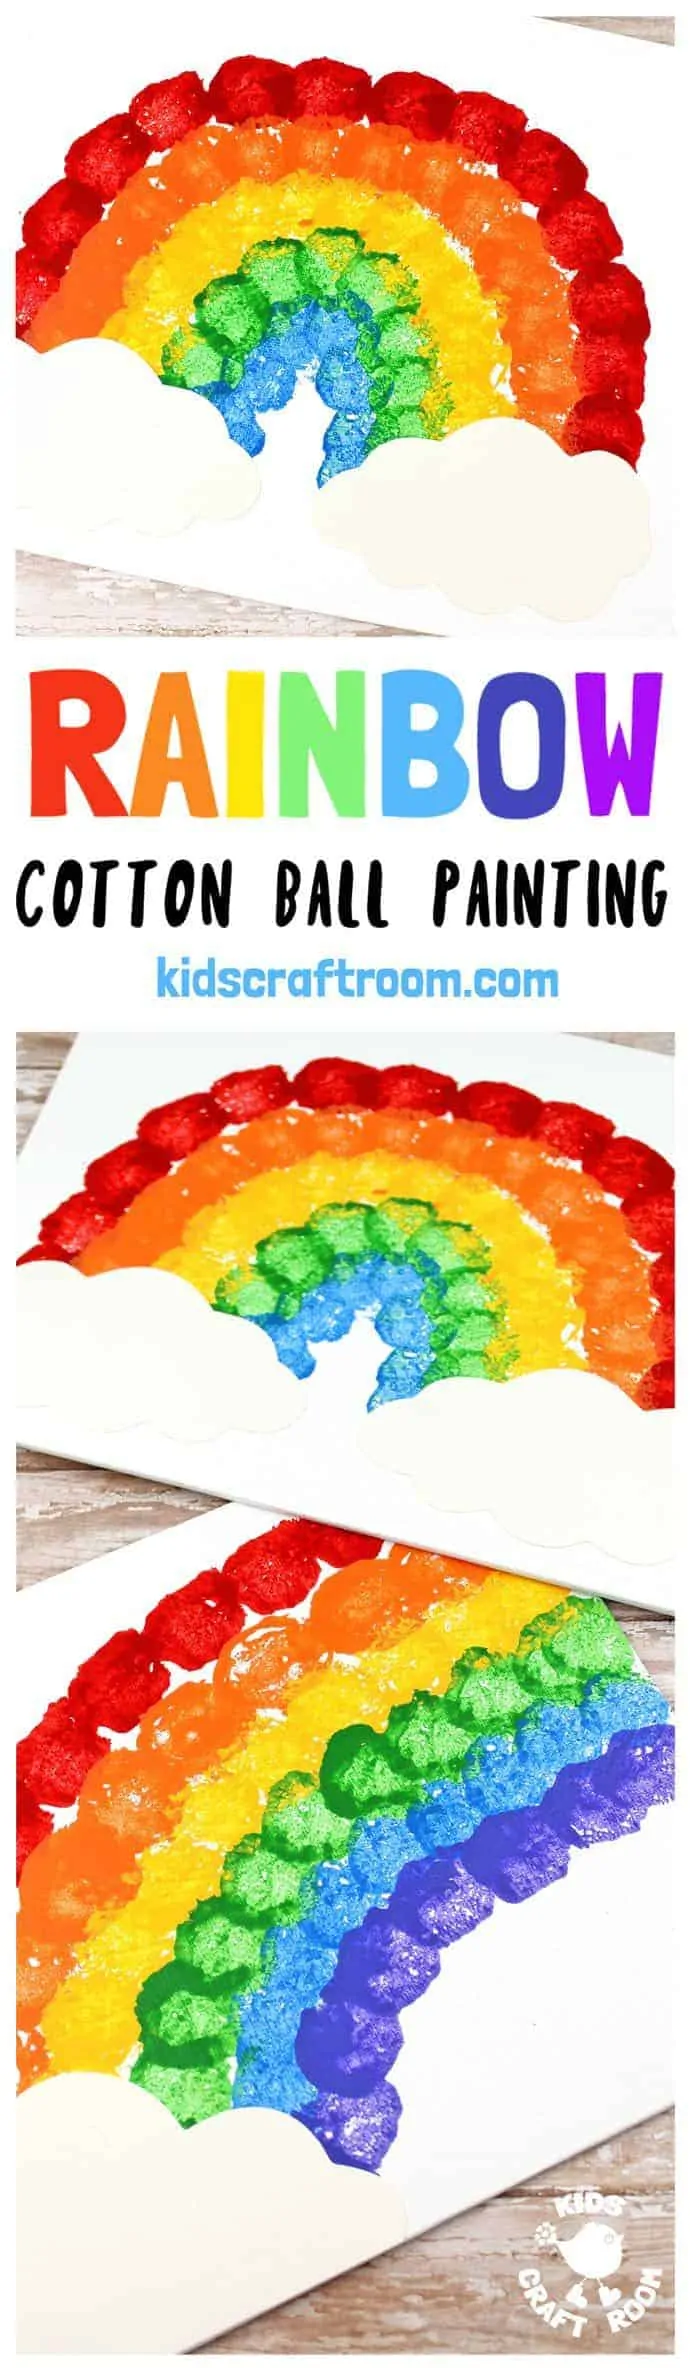 Rainbow Cotton Ball Painting - Kids Craft Room